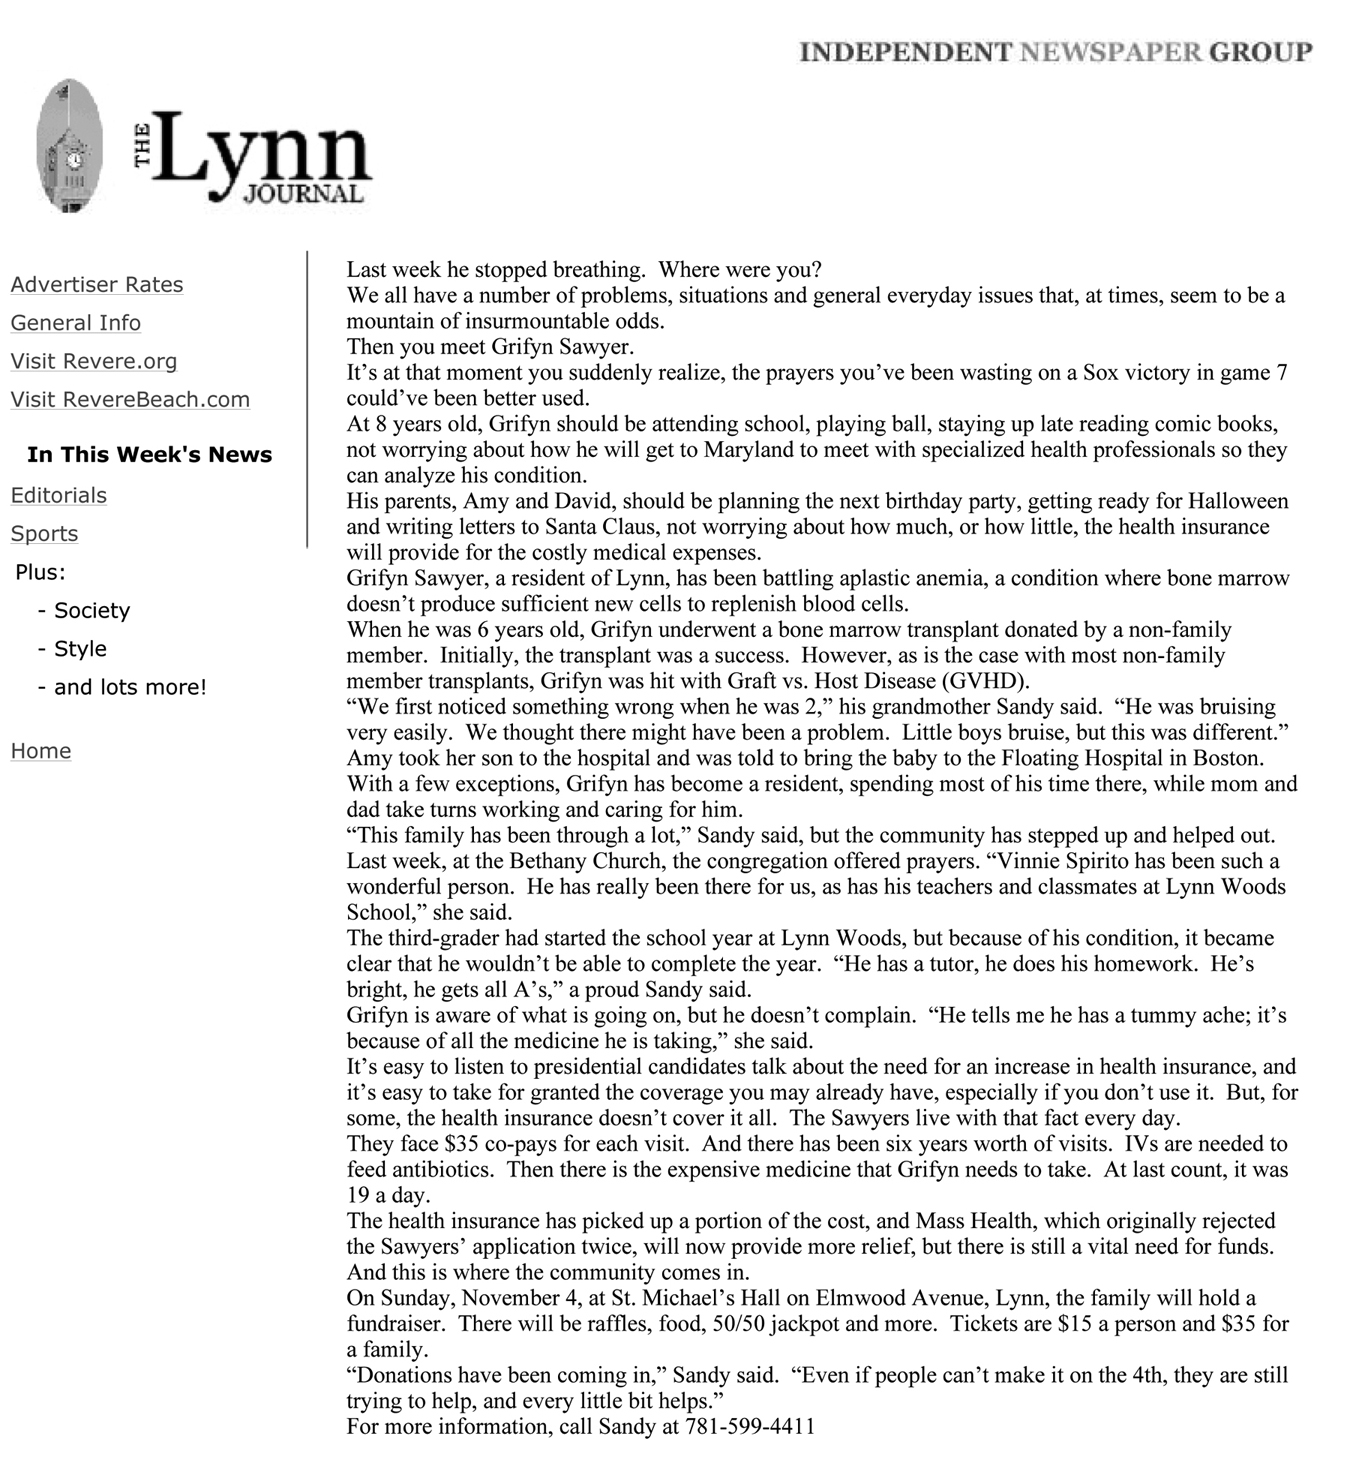 Lynn Journal - October 24, 2007 - By Bill Cooksey